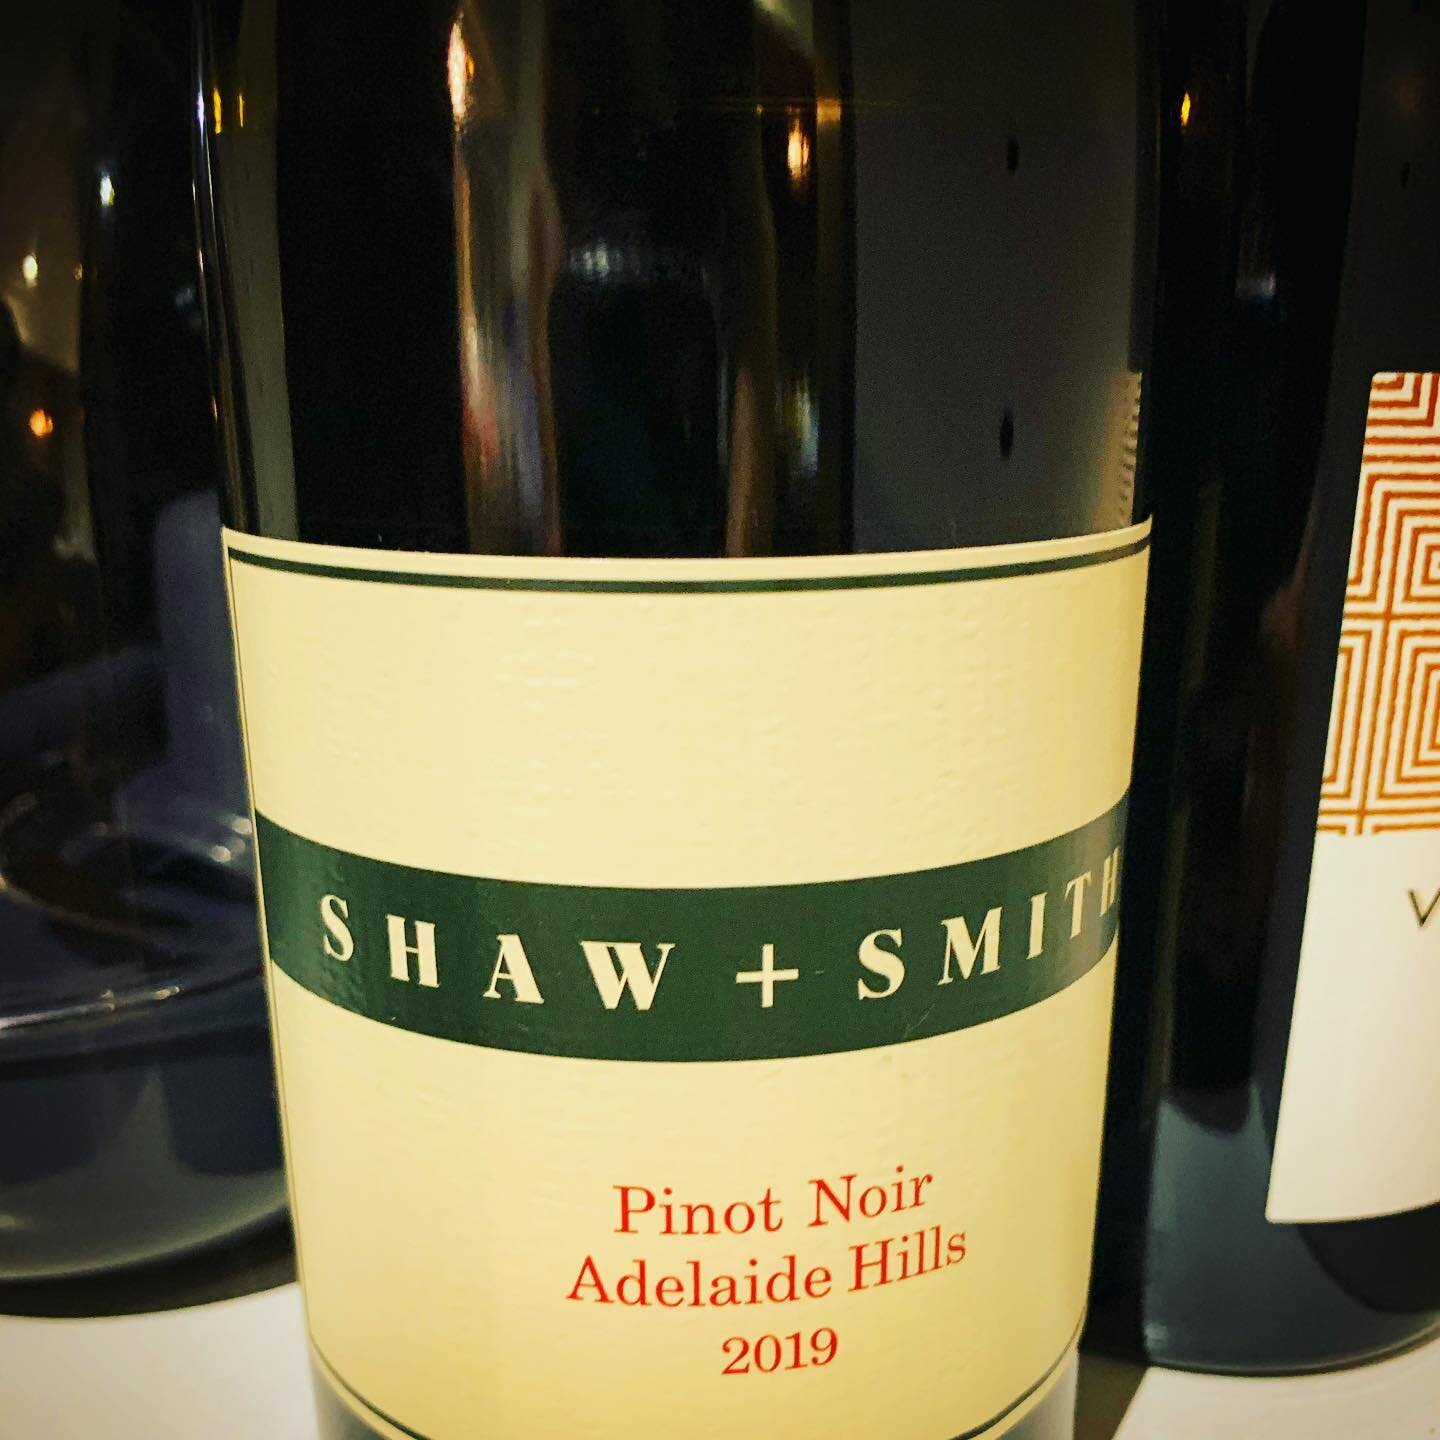 Best Aussie Pinot Noir I&rsquo;ve had in a while.....

.
.
.
#wine #pinotnoir #australianwine #pinotnoirlover #winelover #winetime #shawsmithpinotnoir @shawandsmith